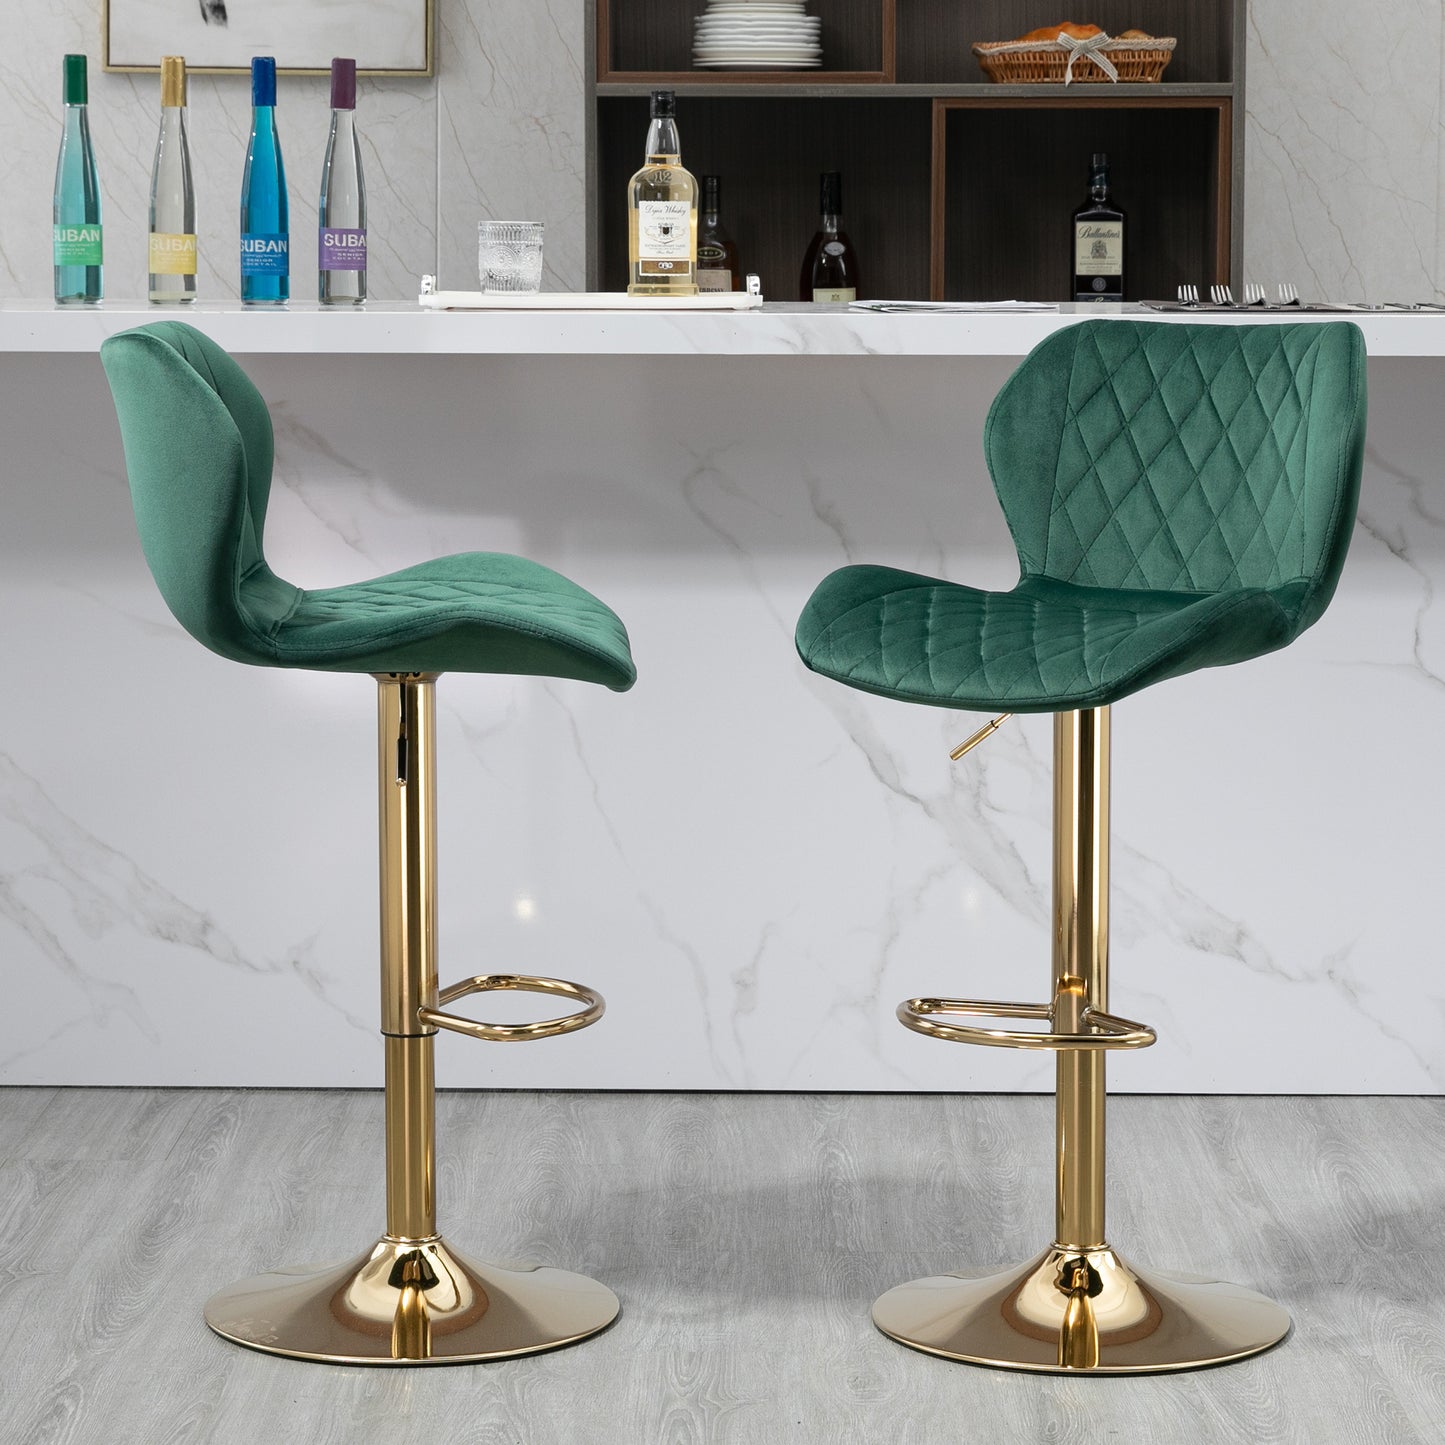 Green Velvet Adjustable Swivel Bar Stools Set Of 2 Modern Counter Height Barstools With Golden Color Base - Enova Luxe Home Store